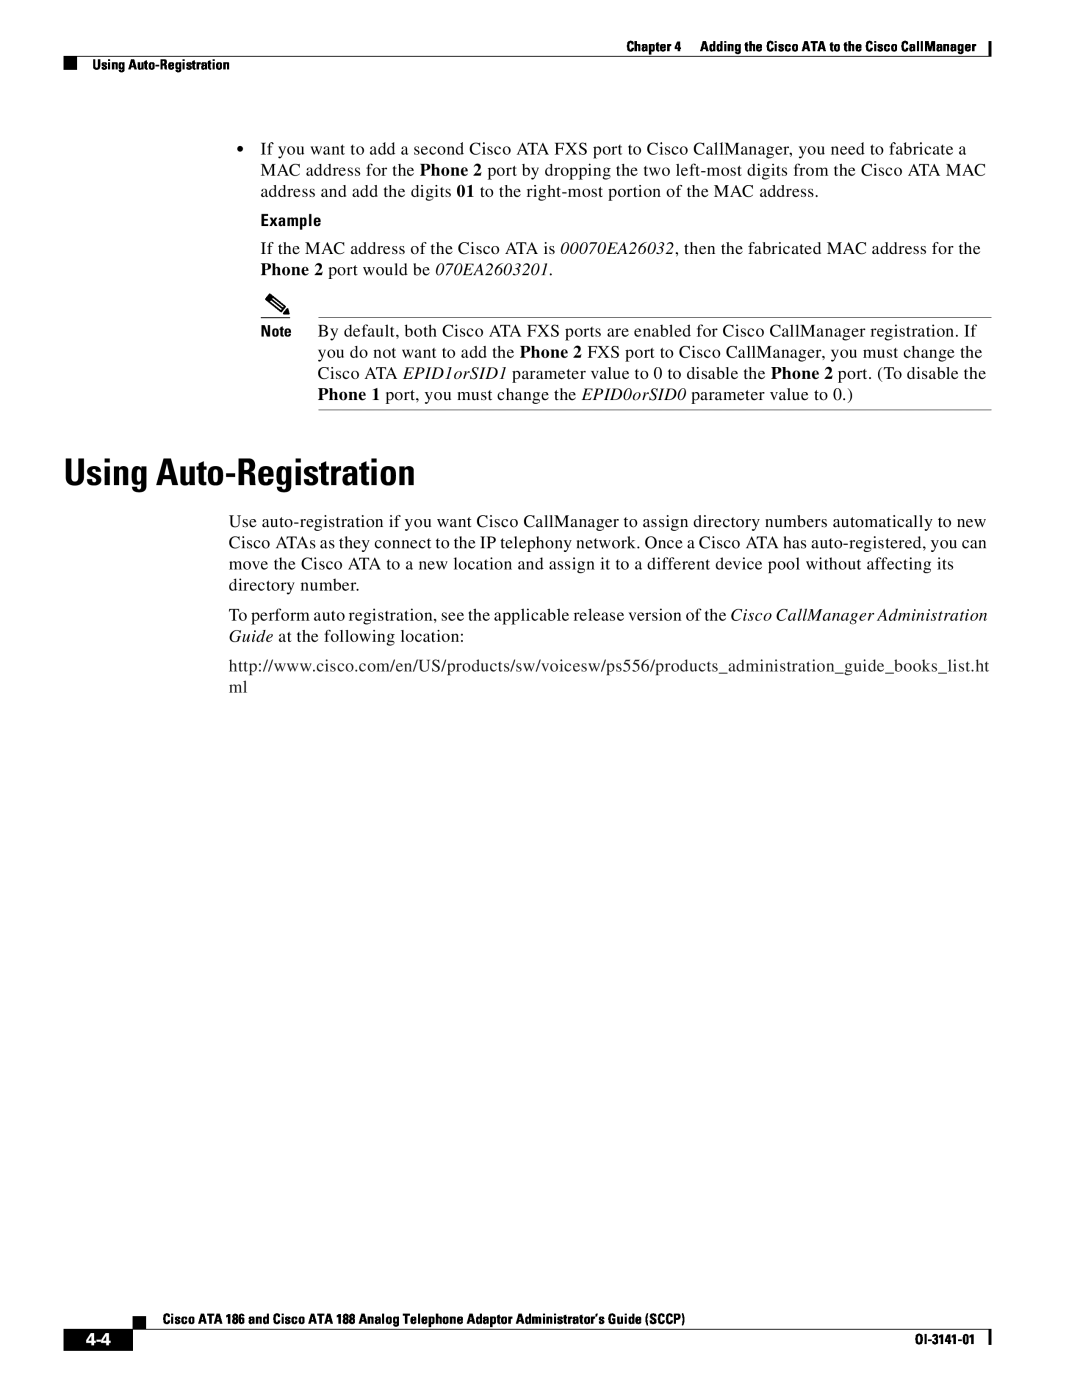 Cisco Systems ATA 186, ATA 188 manual Using Auto-Registration, Example 